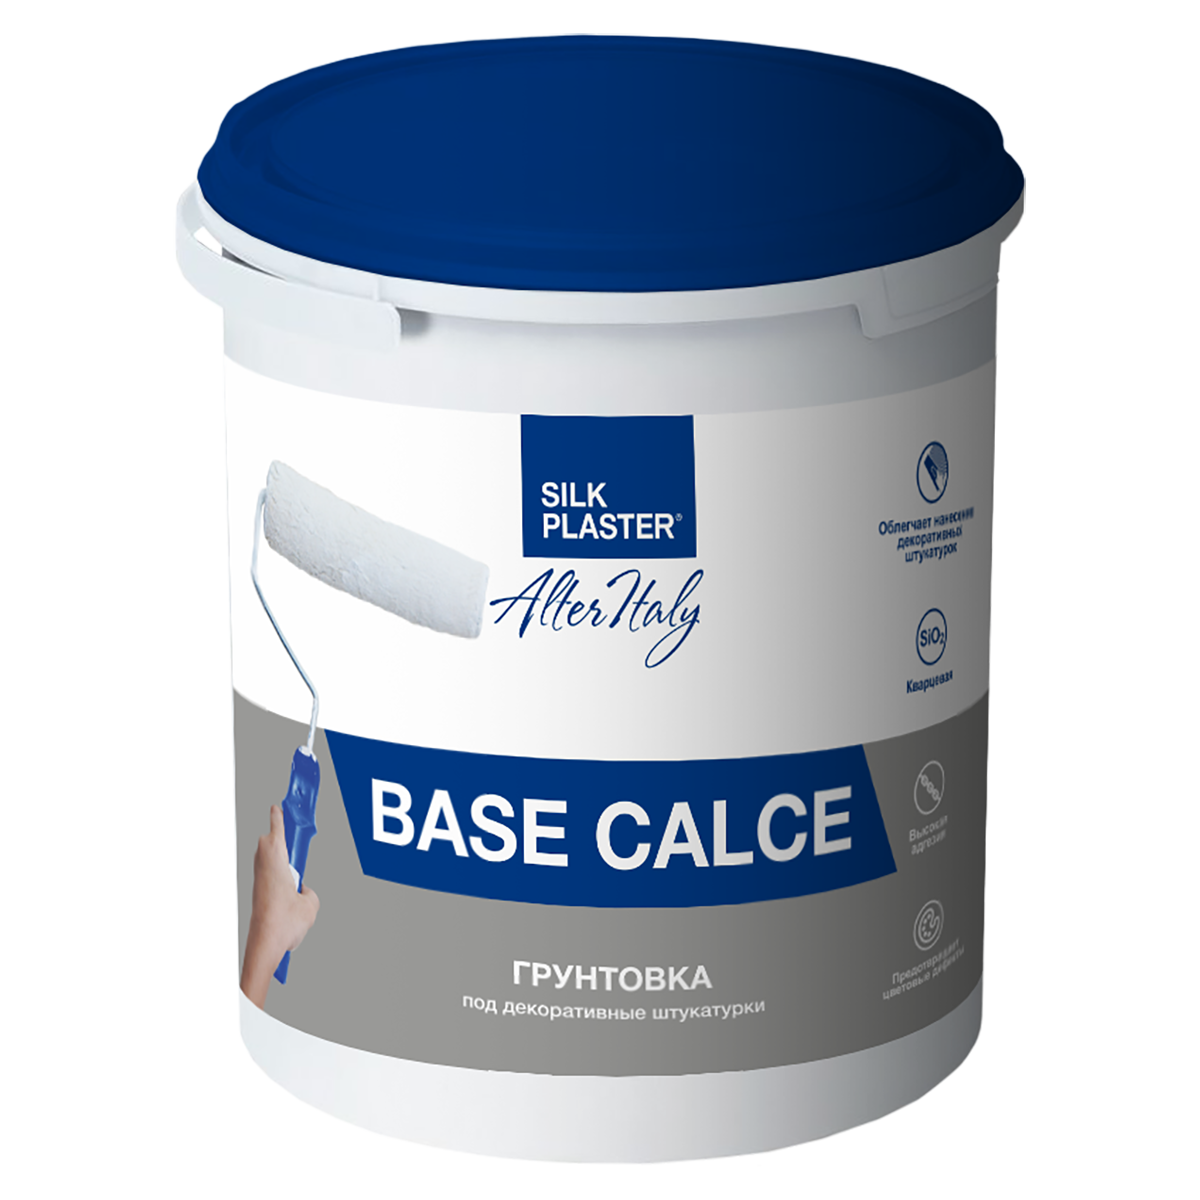  AlterItaly BASE Calce   